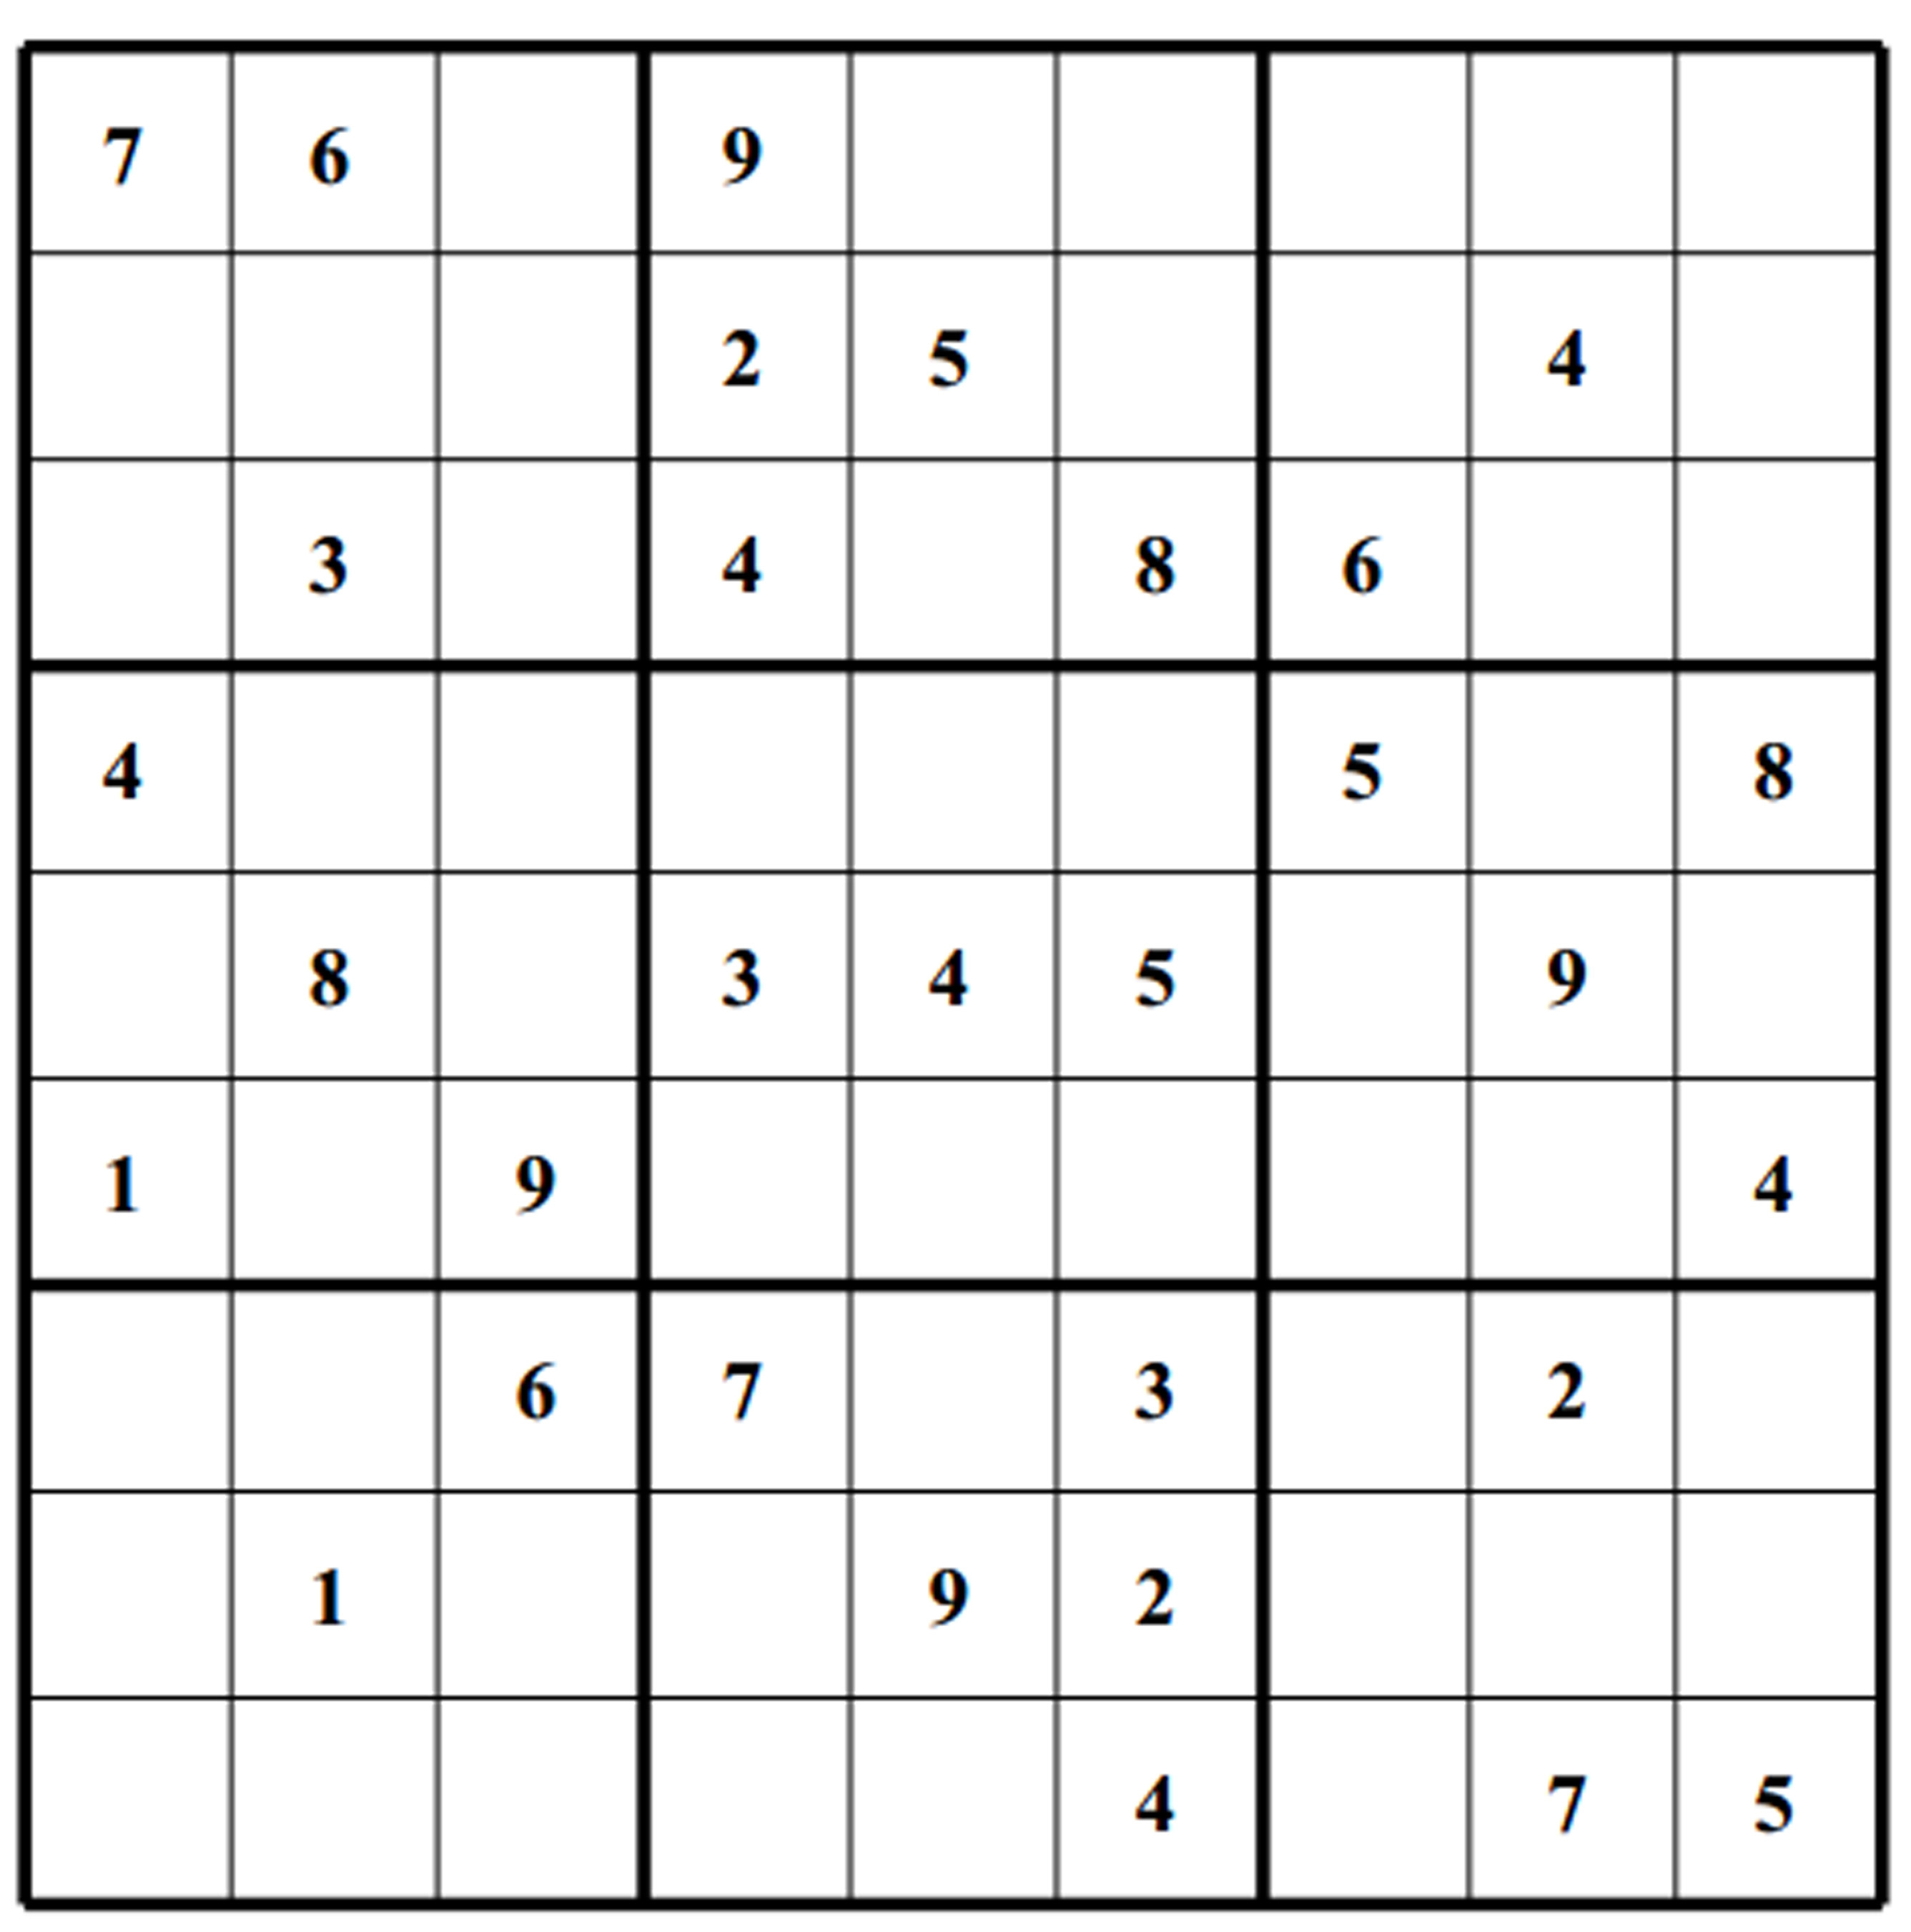 Free Sudoku Puzzles | Enjoy Daily Free Sudoku Puzzles From Walapie - Sudoku X Printable Puzzles